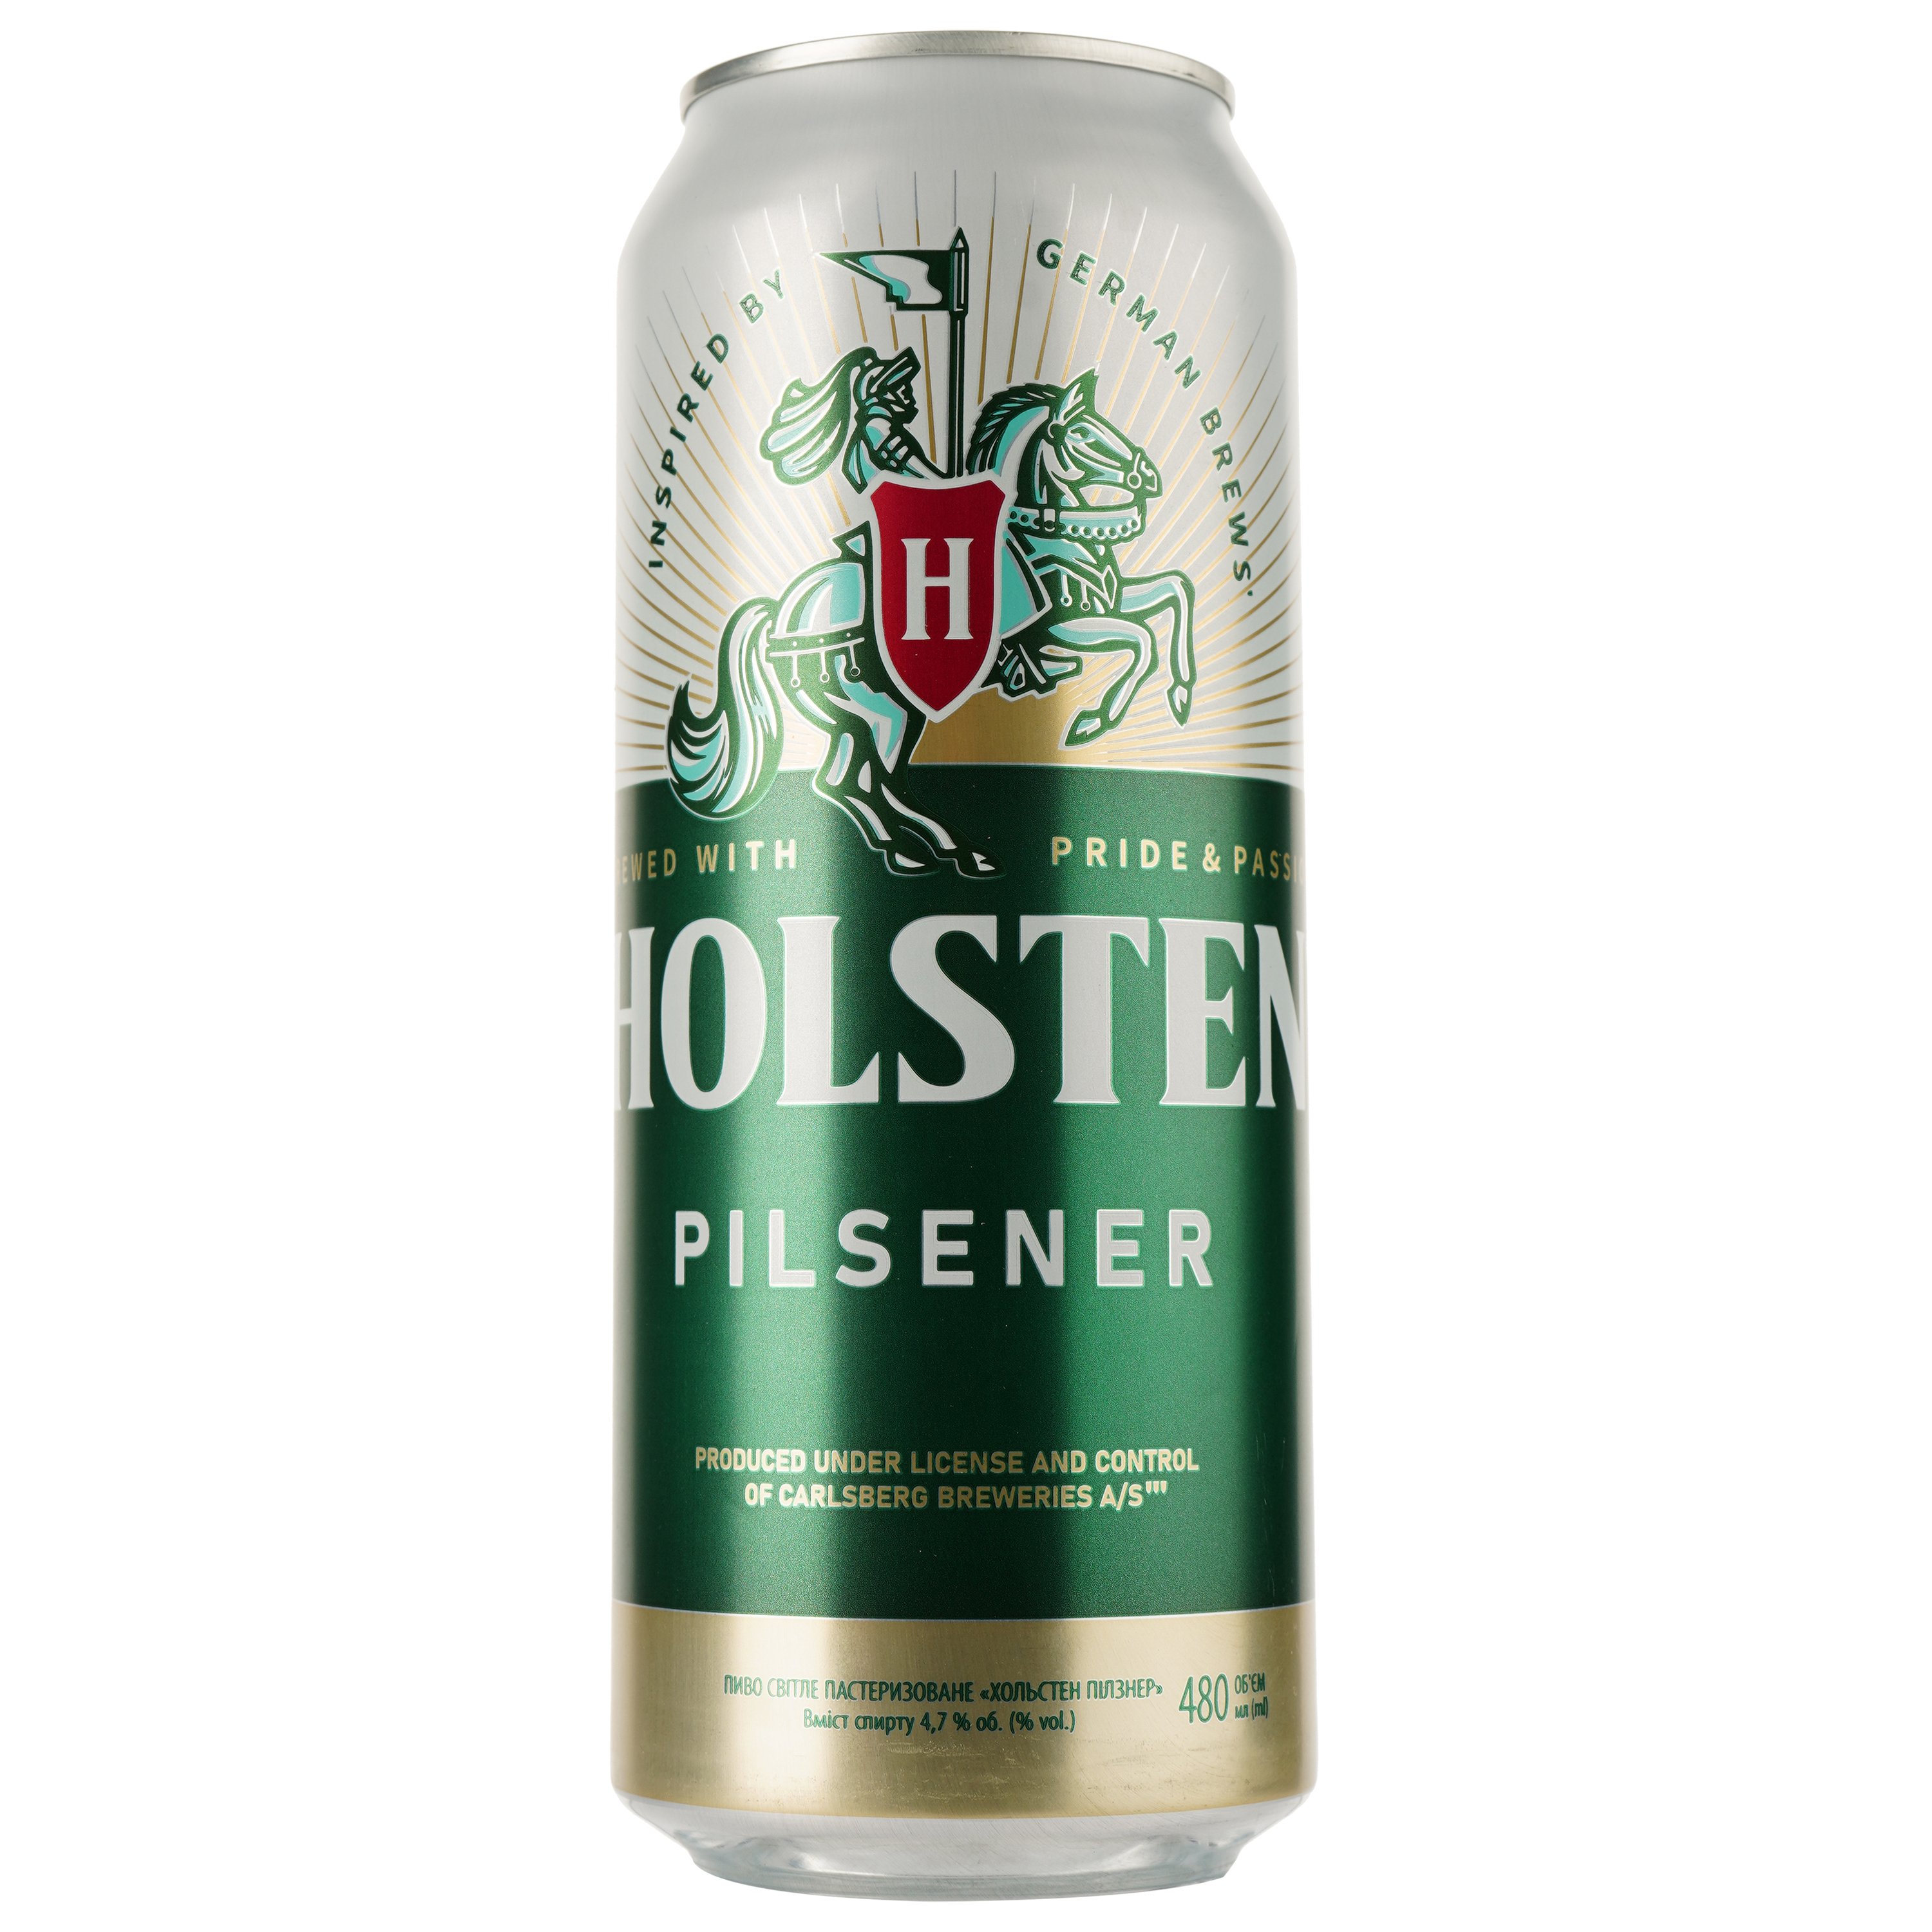 Пиво Holsten Pilsener, світле, 4,7%, з/б, 0,48 л (909343) - фото 1